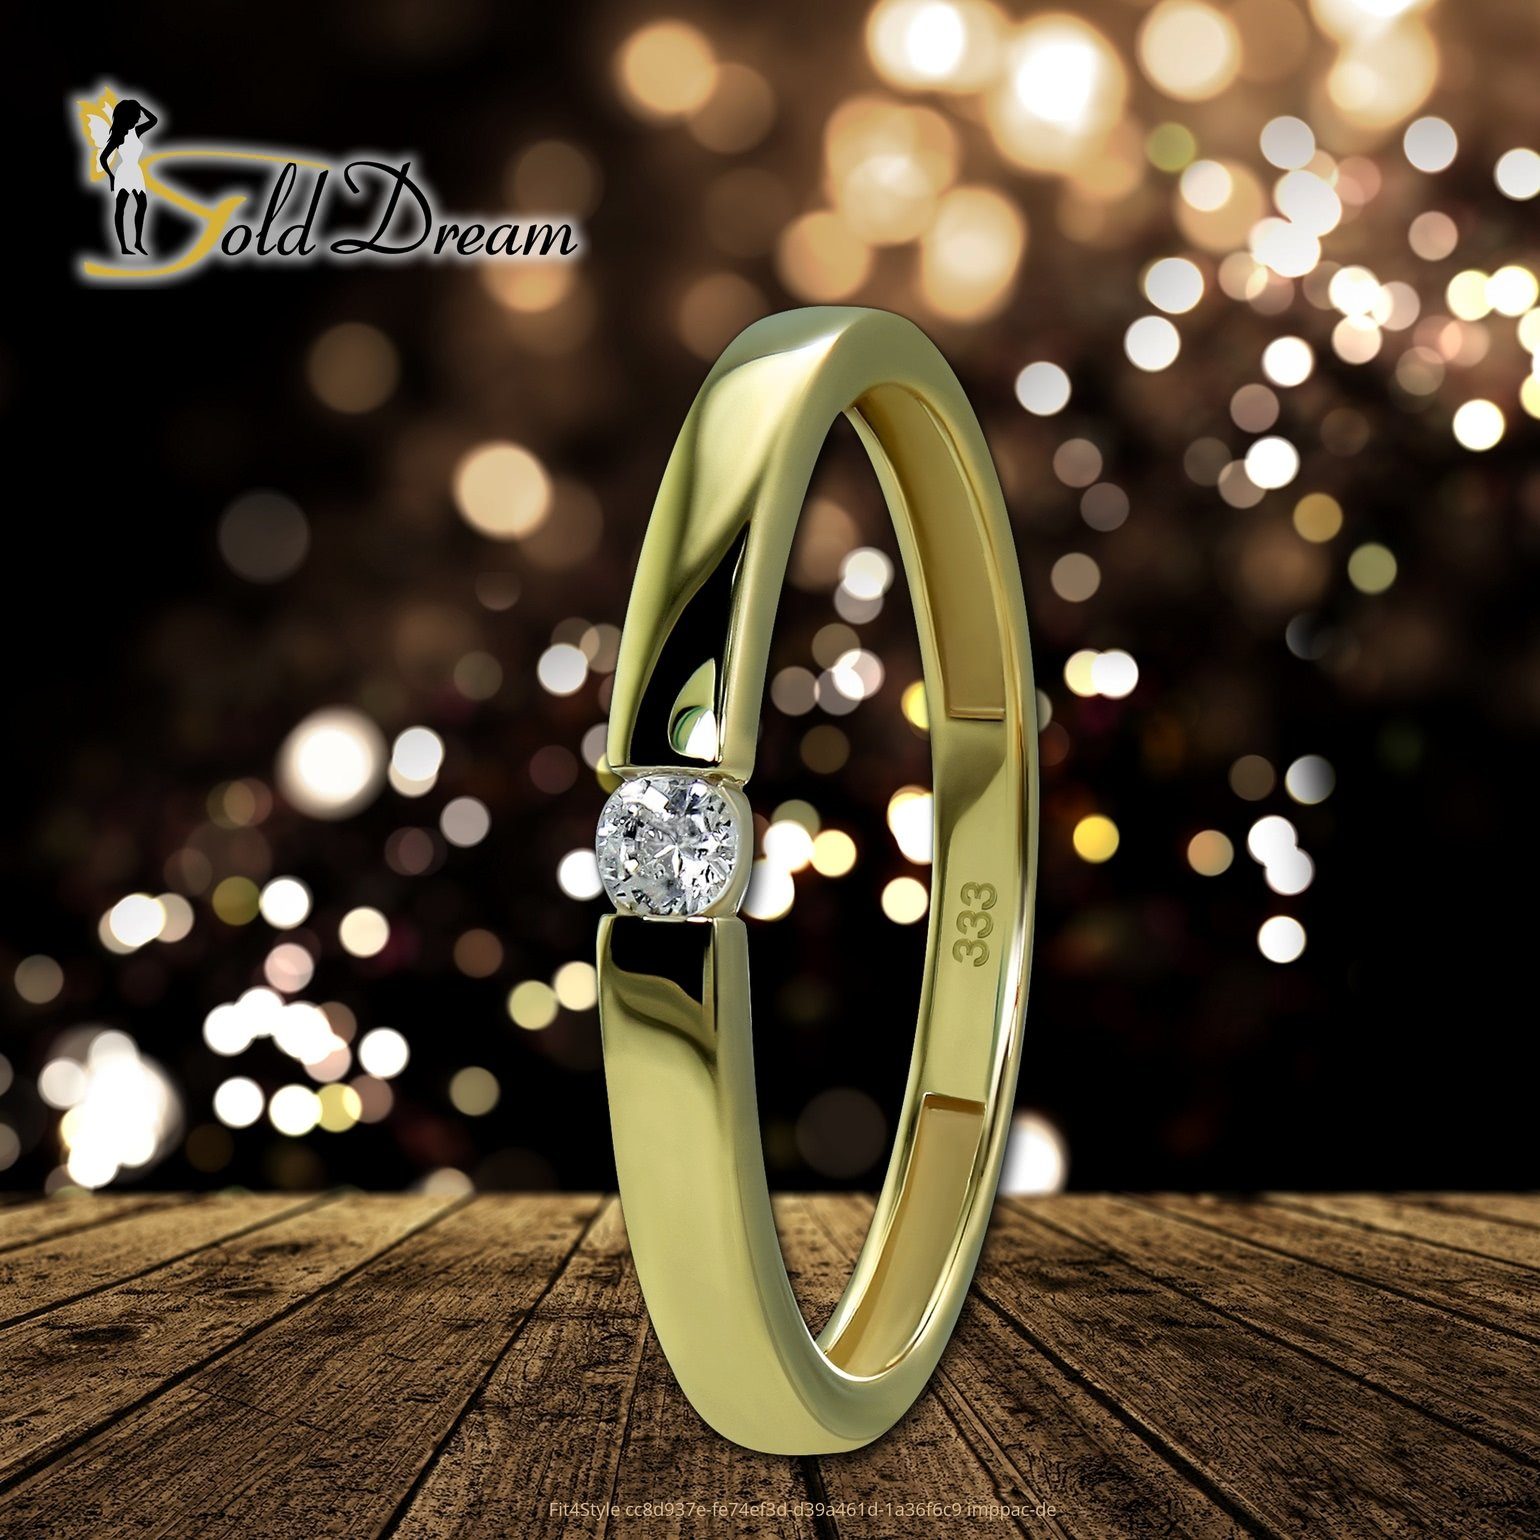 Gr.60 Ring GoldDream gold, Gold Damen Farbe: Ring 333 Gelbgold Classic (Fingerring), weiß Classic 8 GoldDream - Karat, Goldring